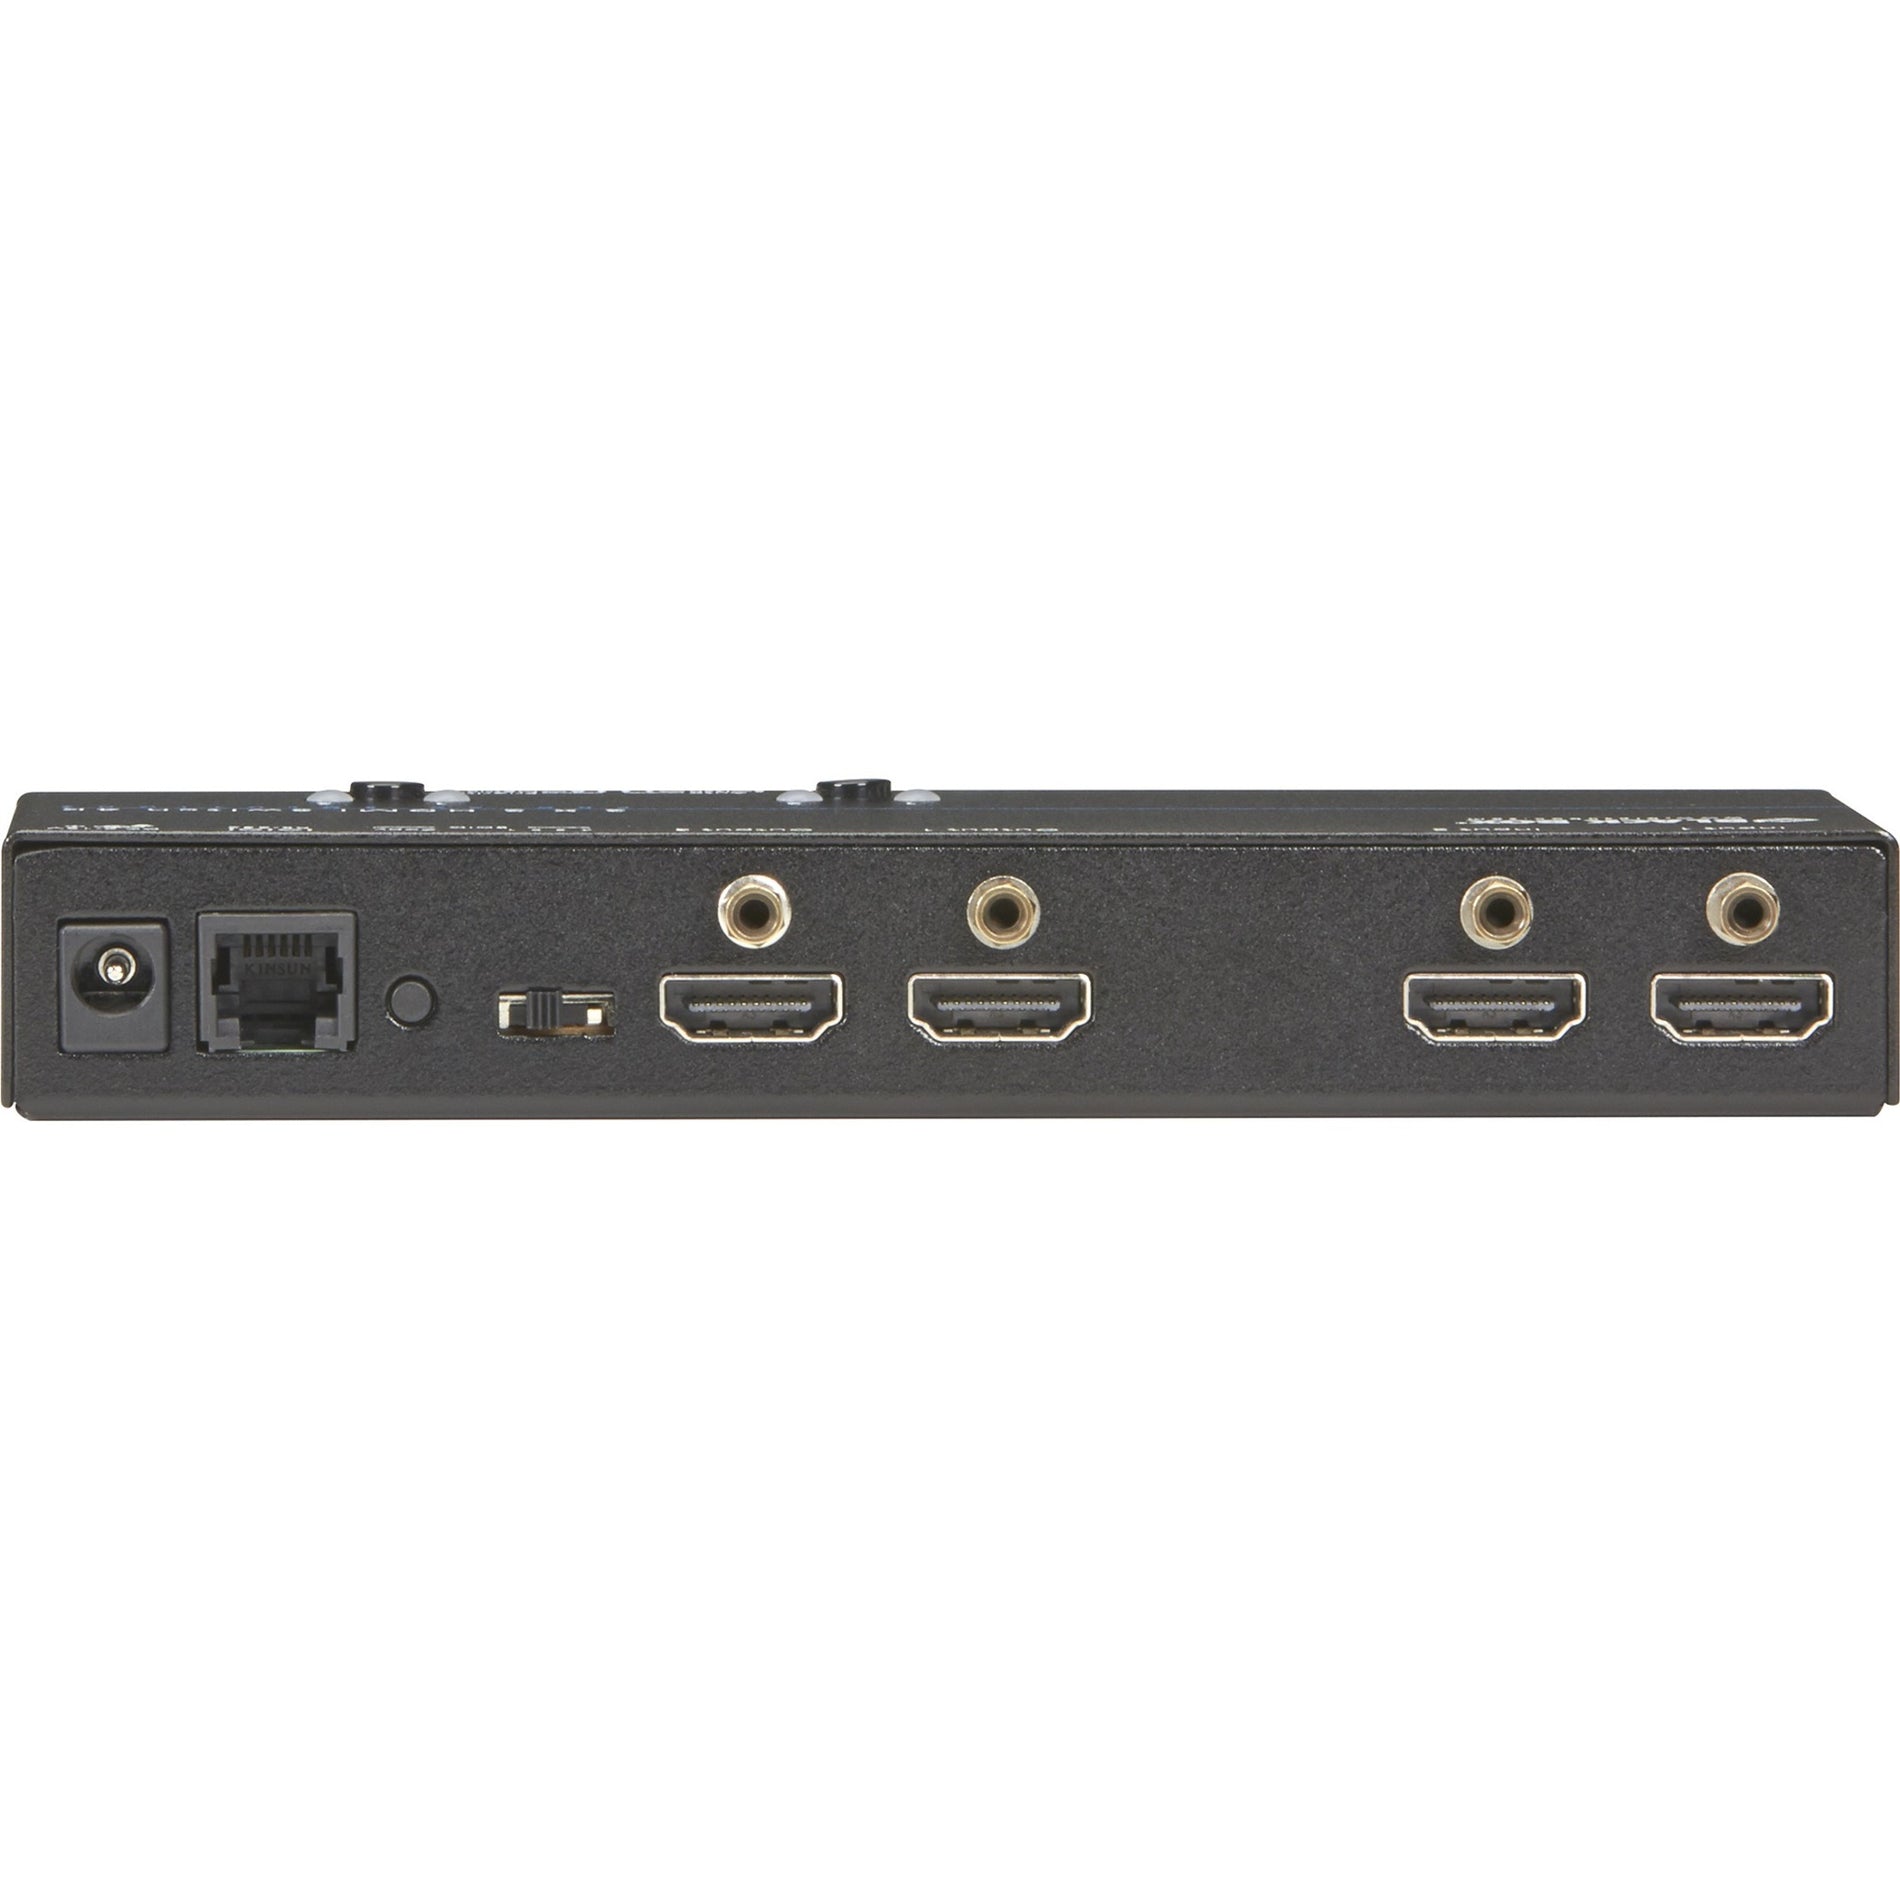 Black Box VSW-HDMI2X2-4K 4K HDMI Matrix Switch - 2 x 2, Easy Video Switching and Control